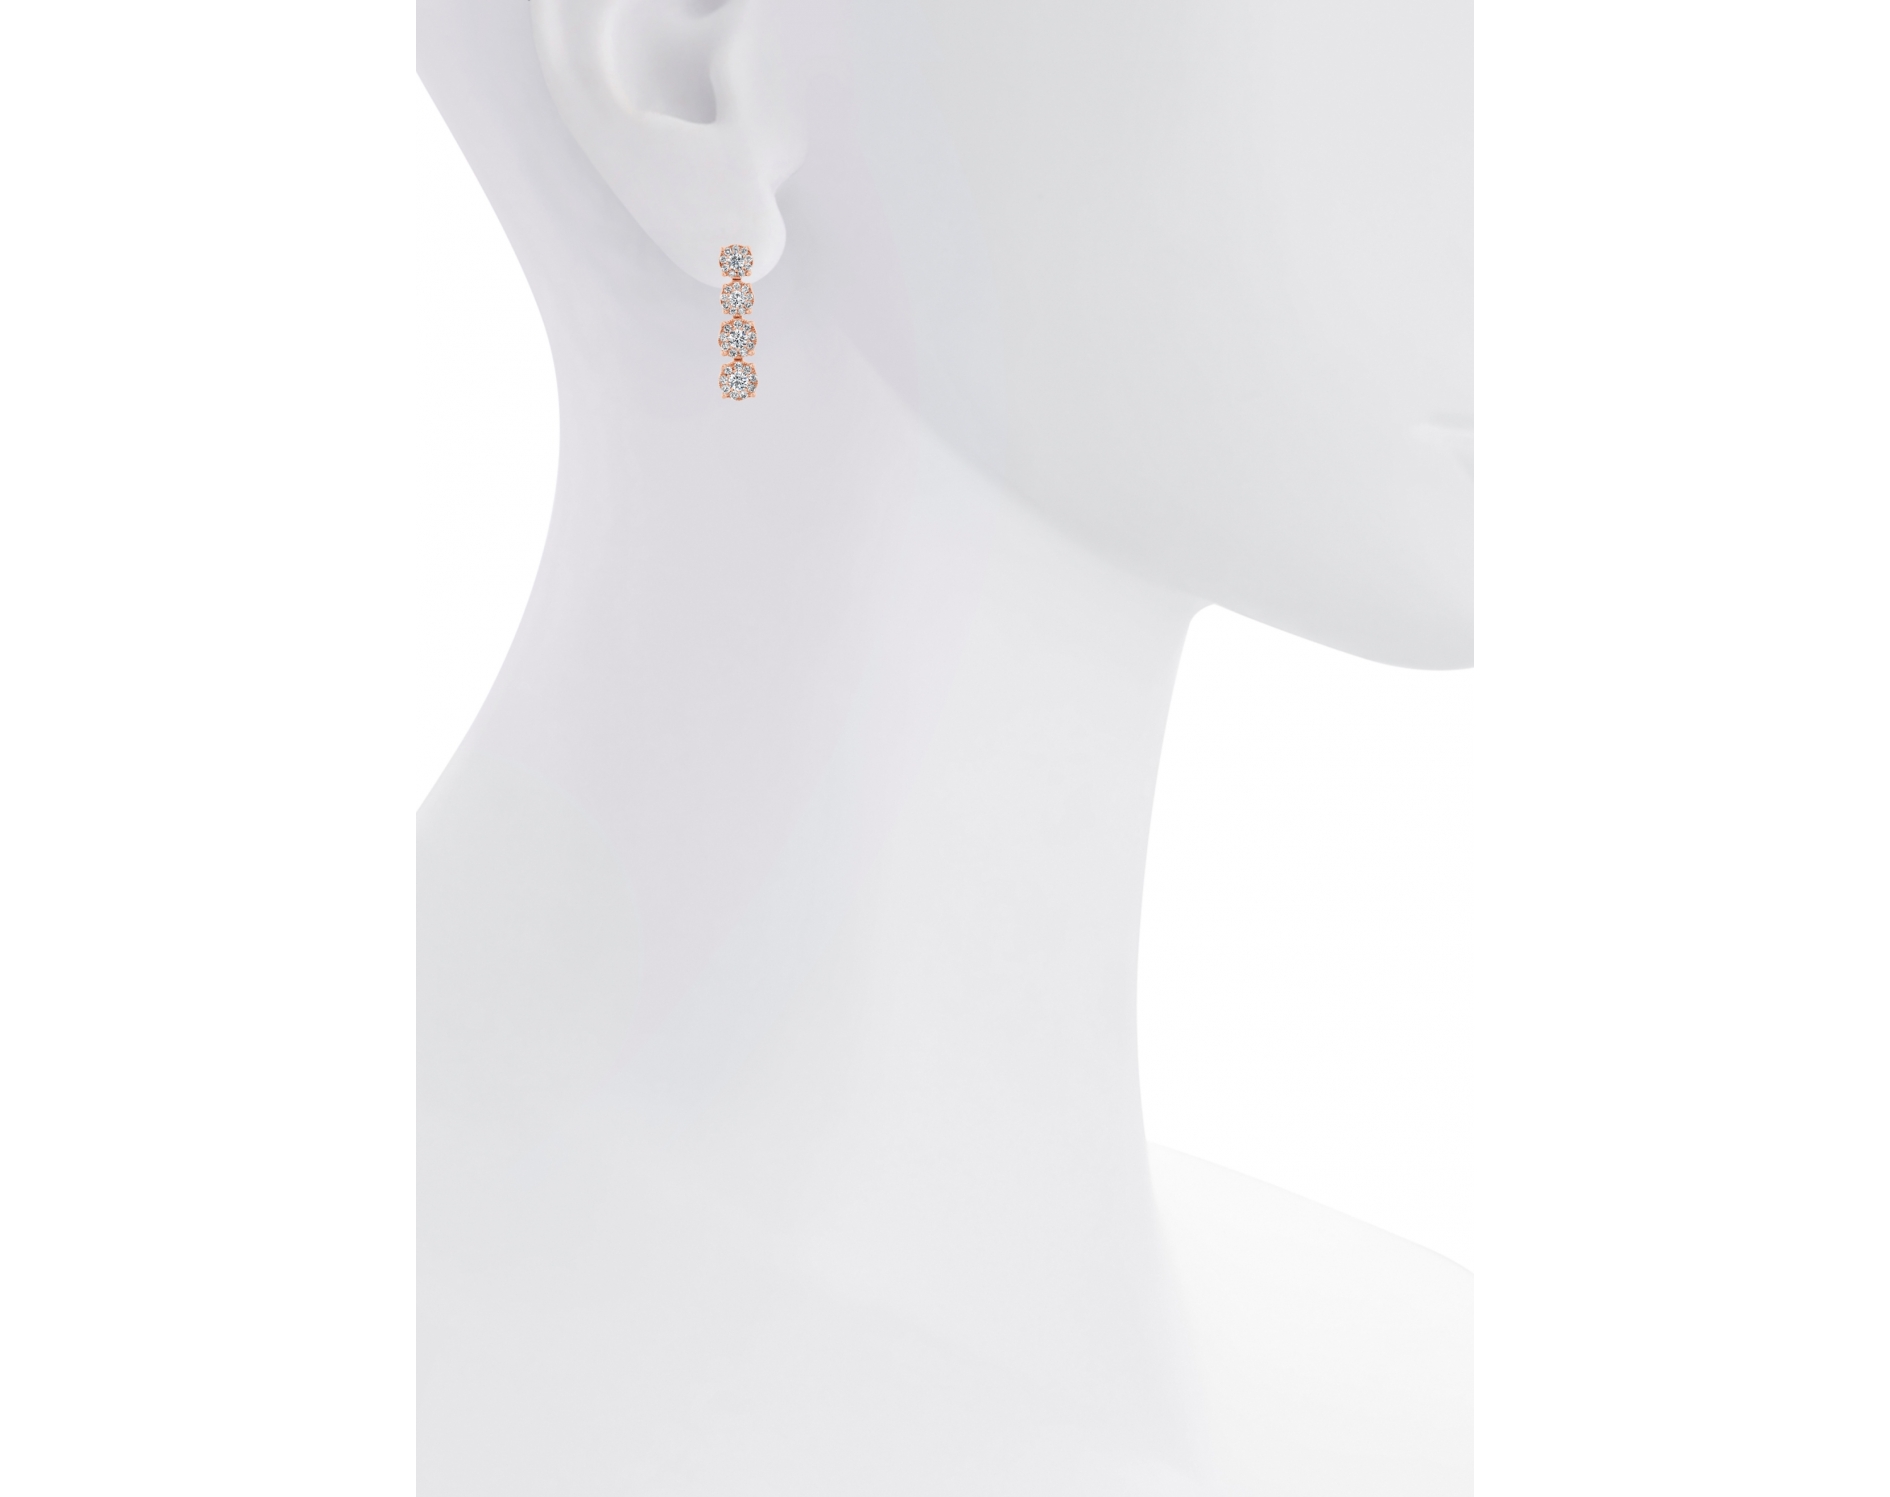 18k rose gold halo illusion set hanging diamond earrings